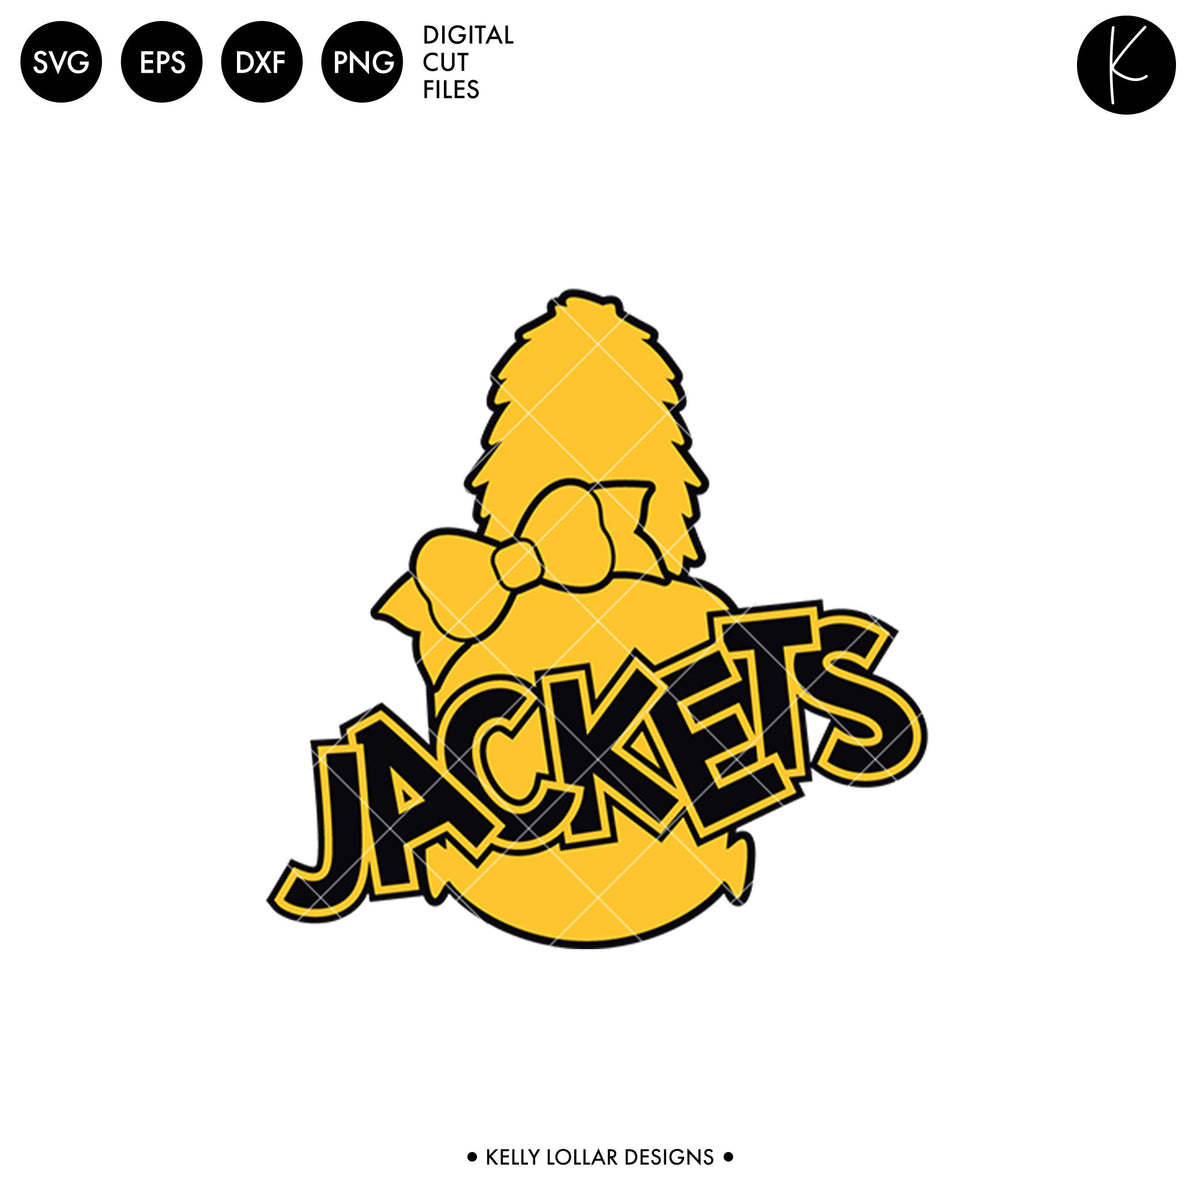 Jackets Band Bundle | SVG DXF EPS PNG Cut Files